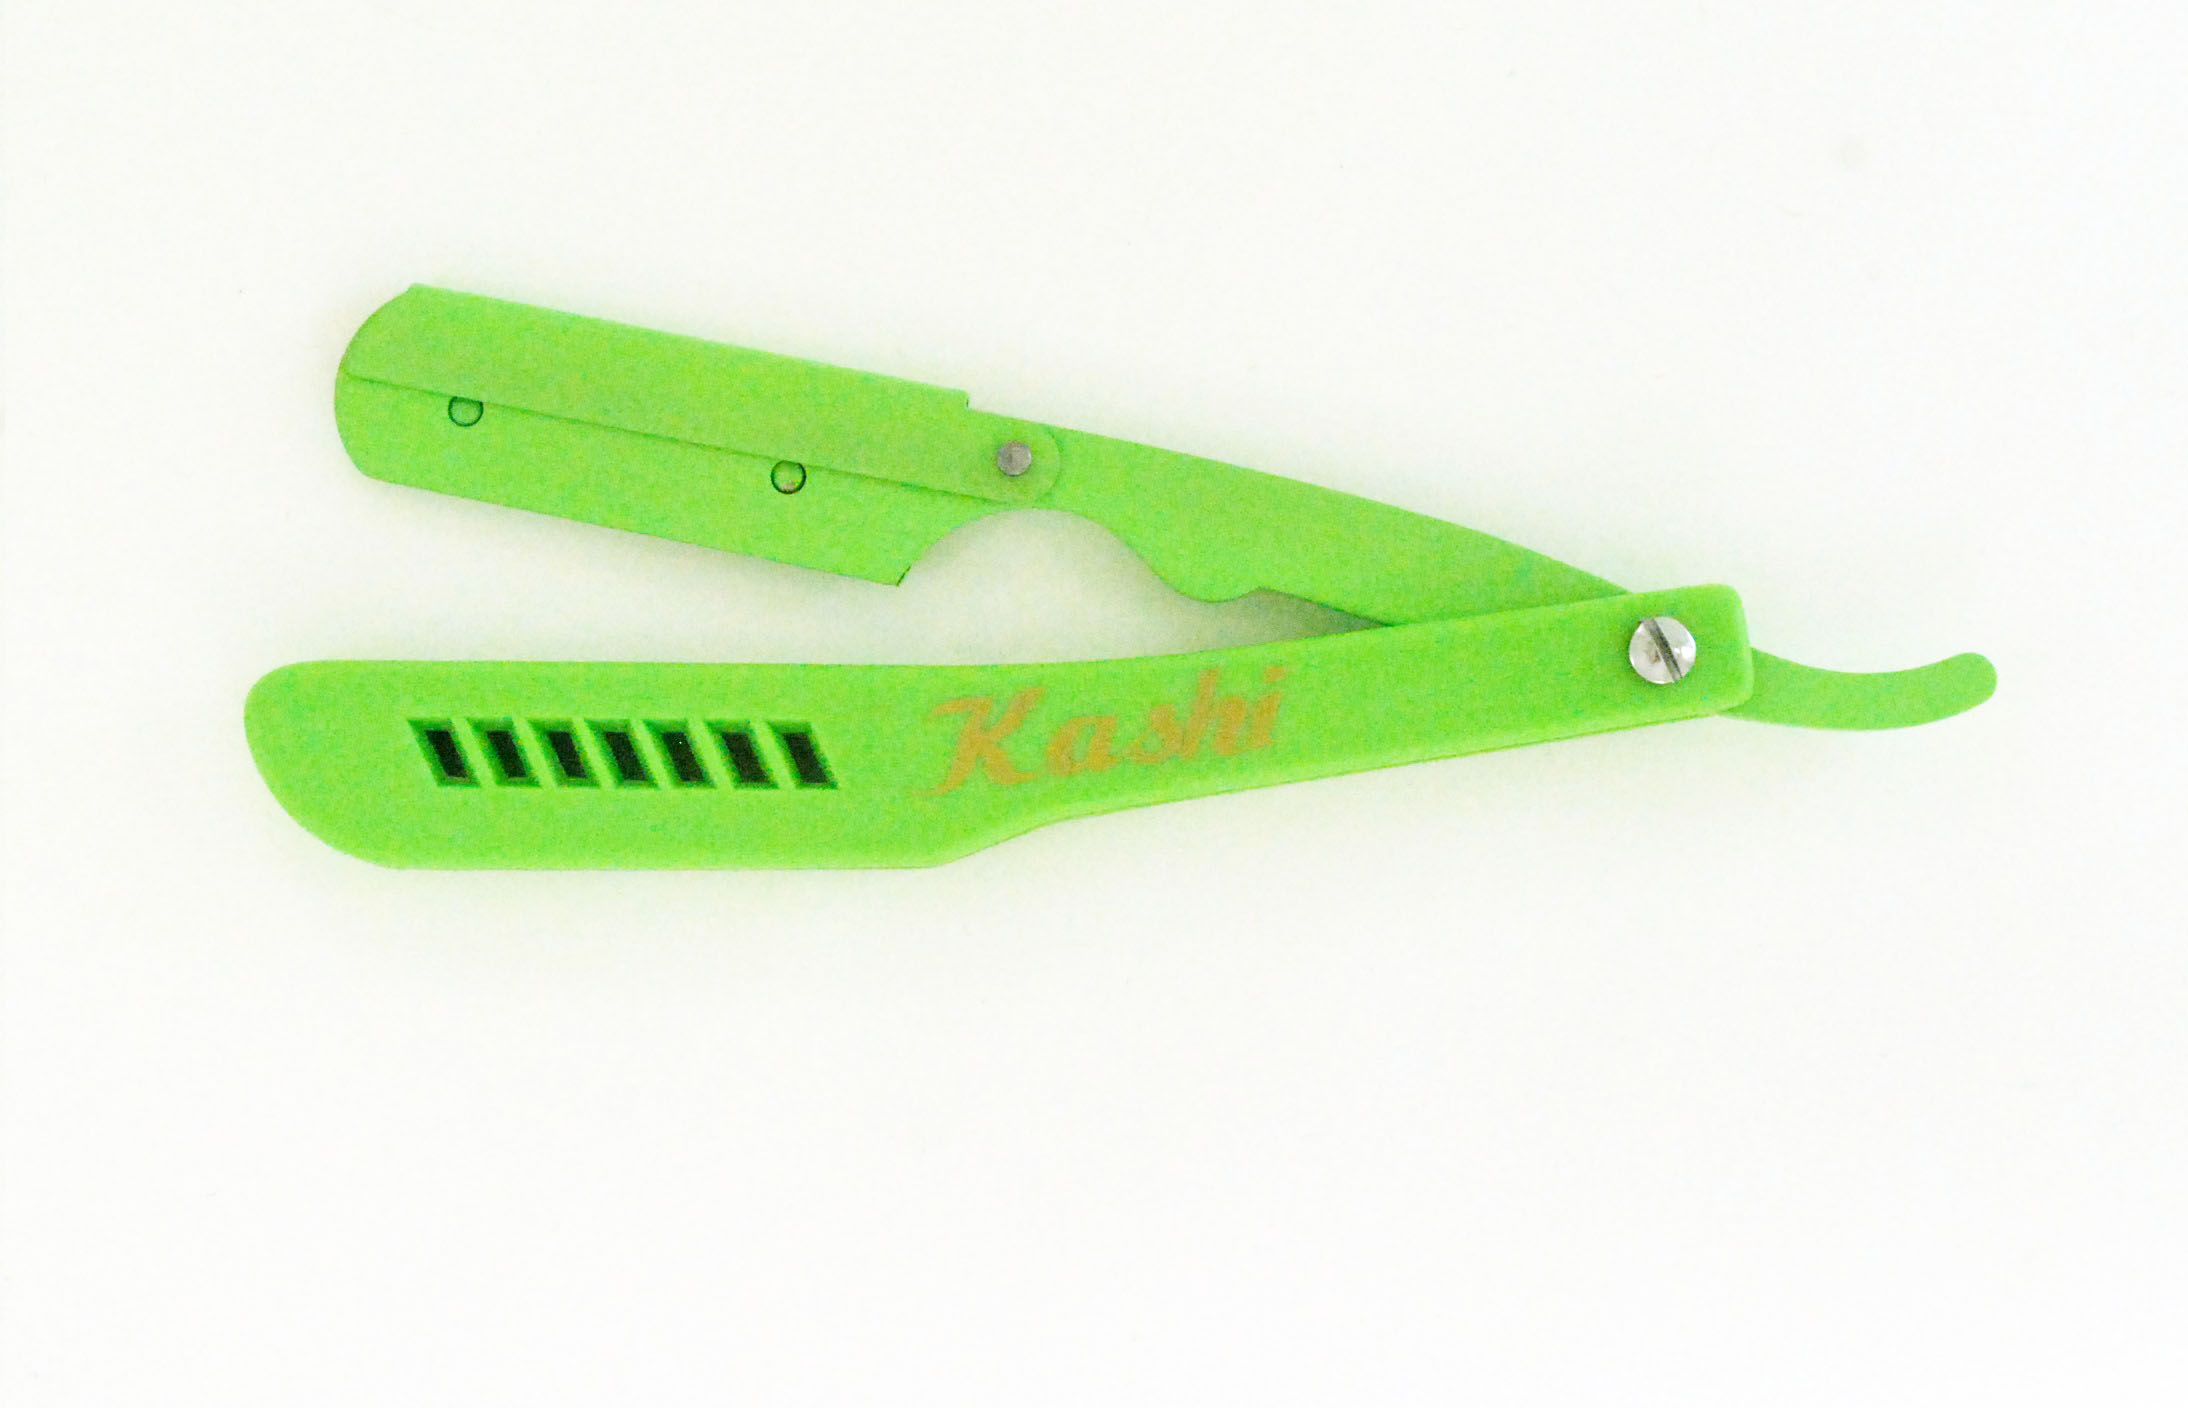 kashi razor holder Green swing